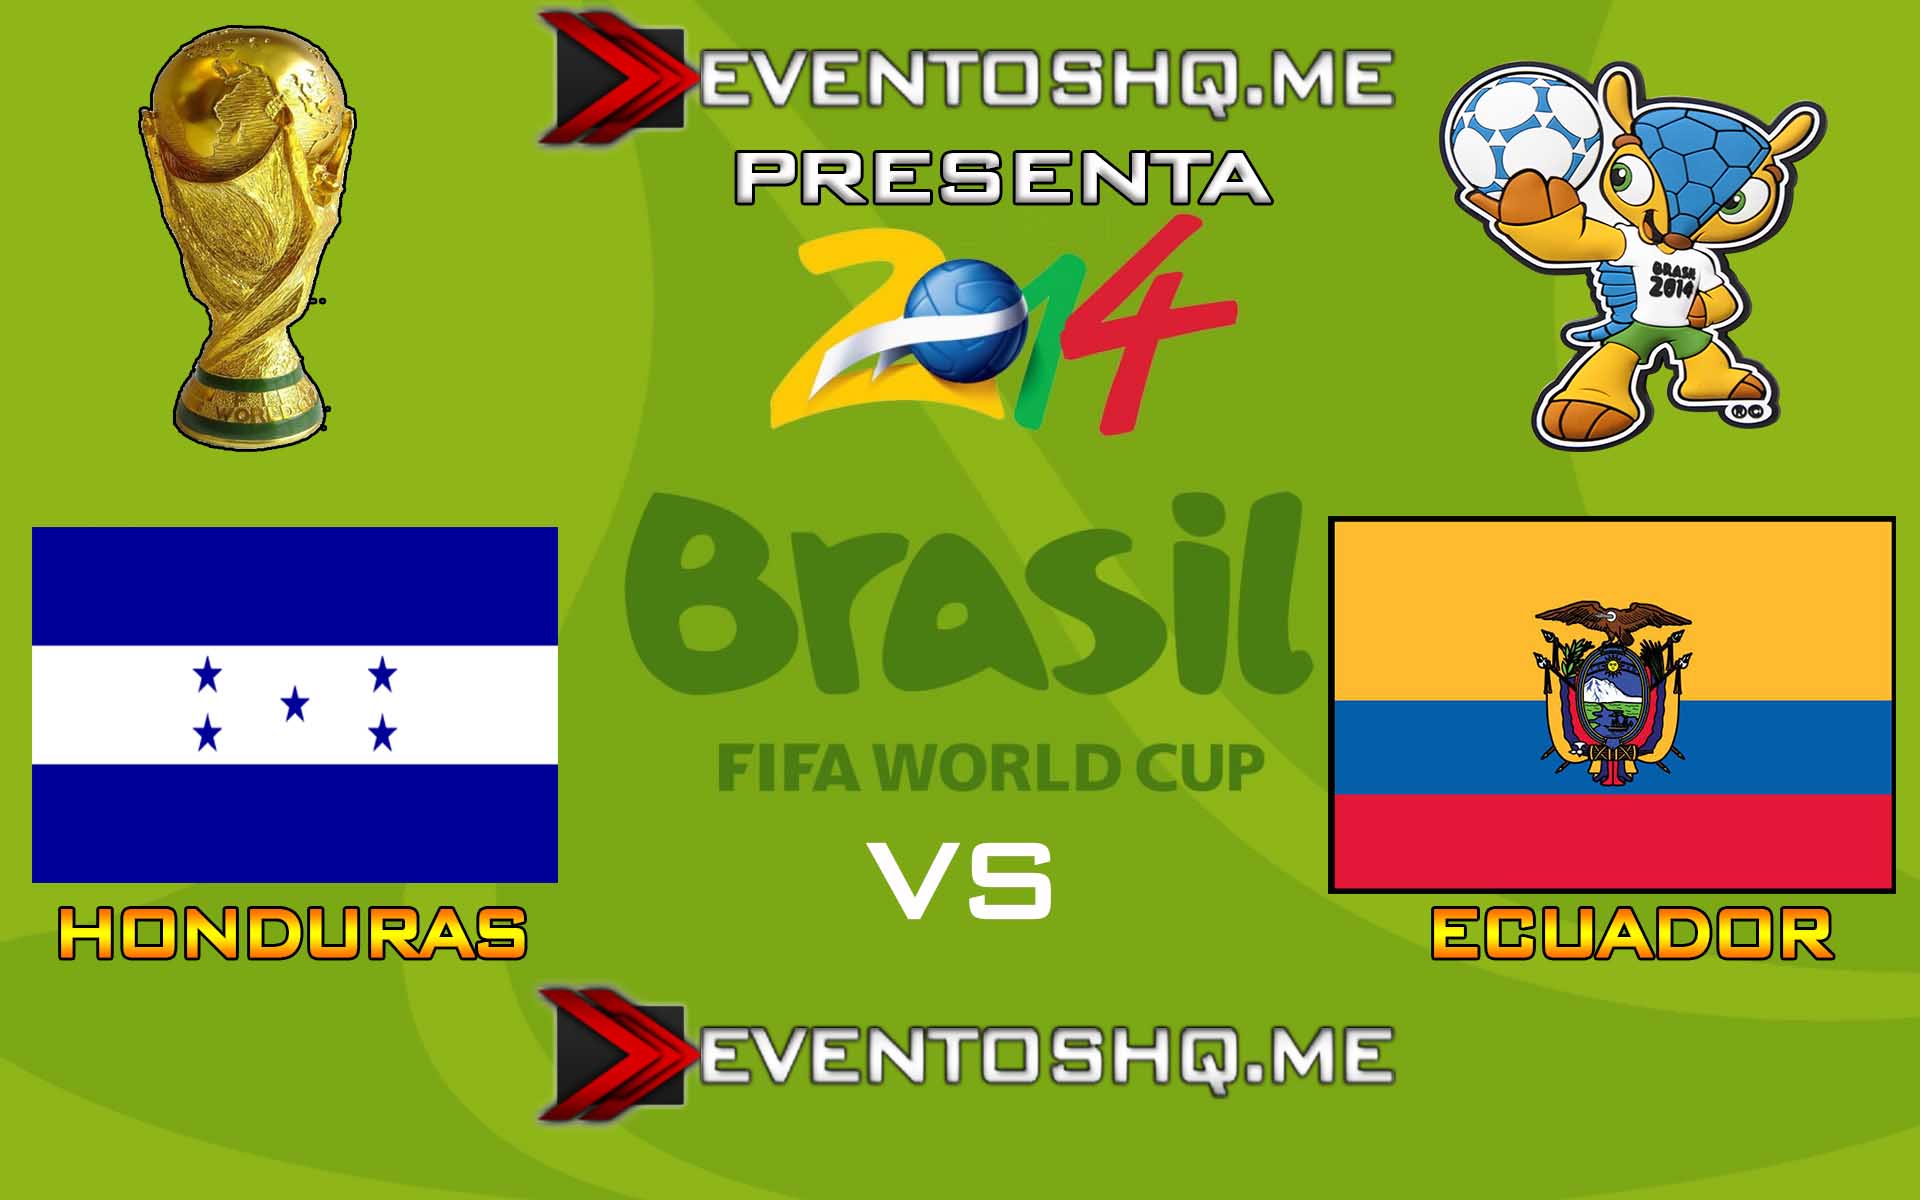 Ver en Vivo Honduras vs Ecuador Mundial Brasil 2014 www.eventoshq.me